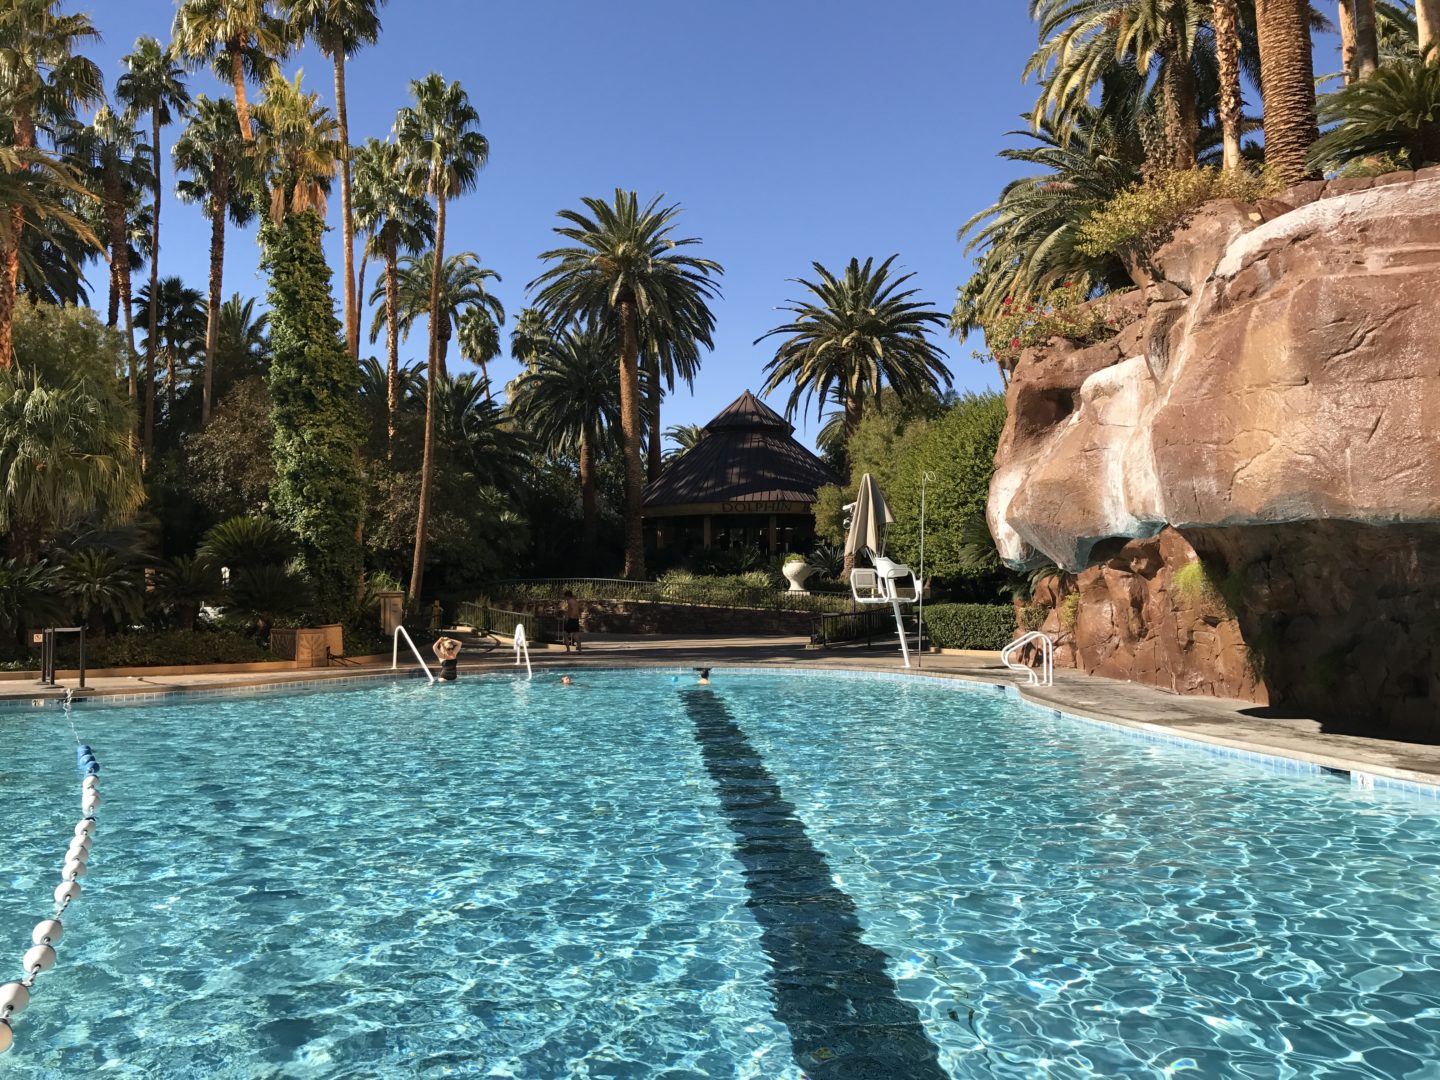 Mirage pool